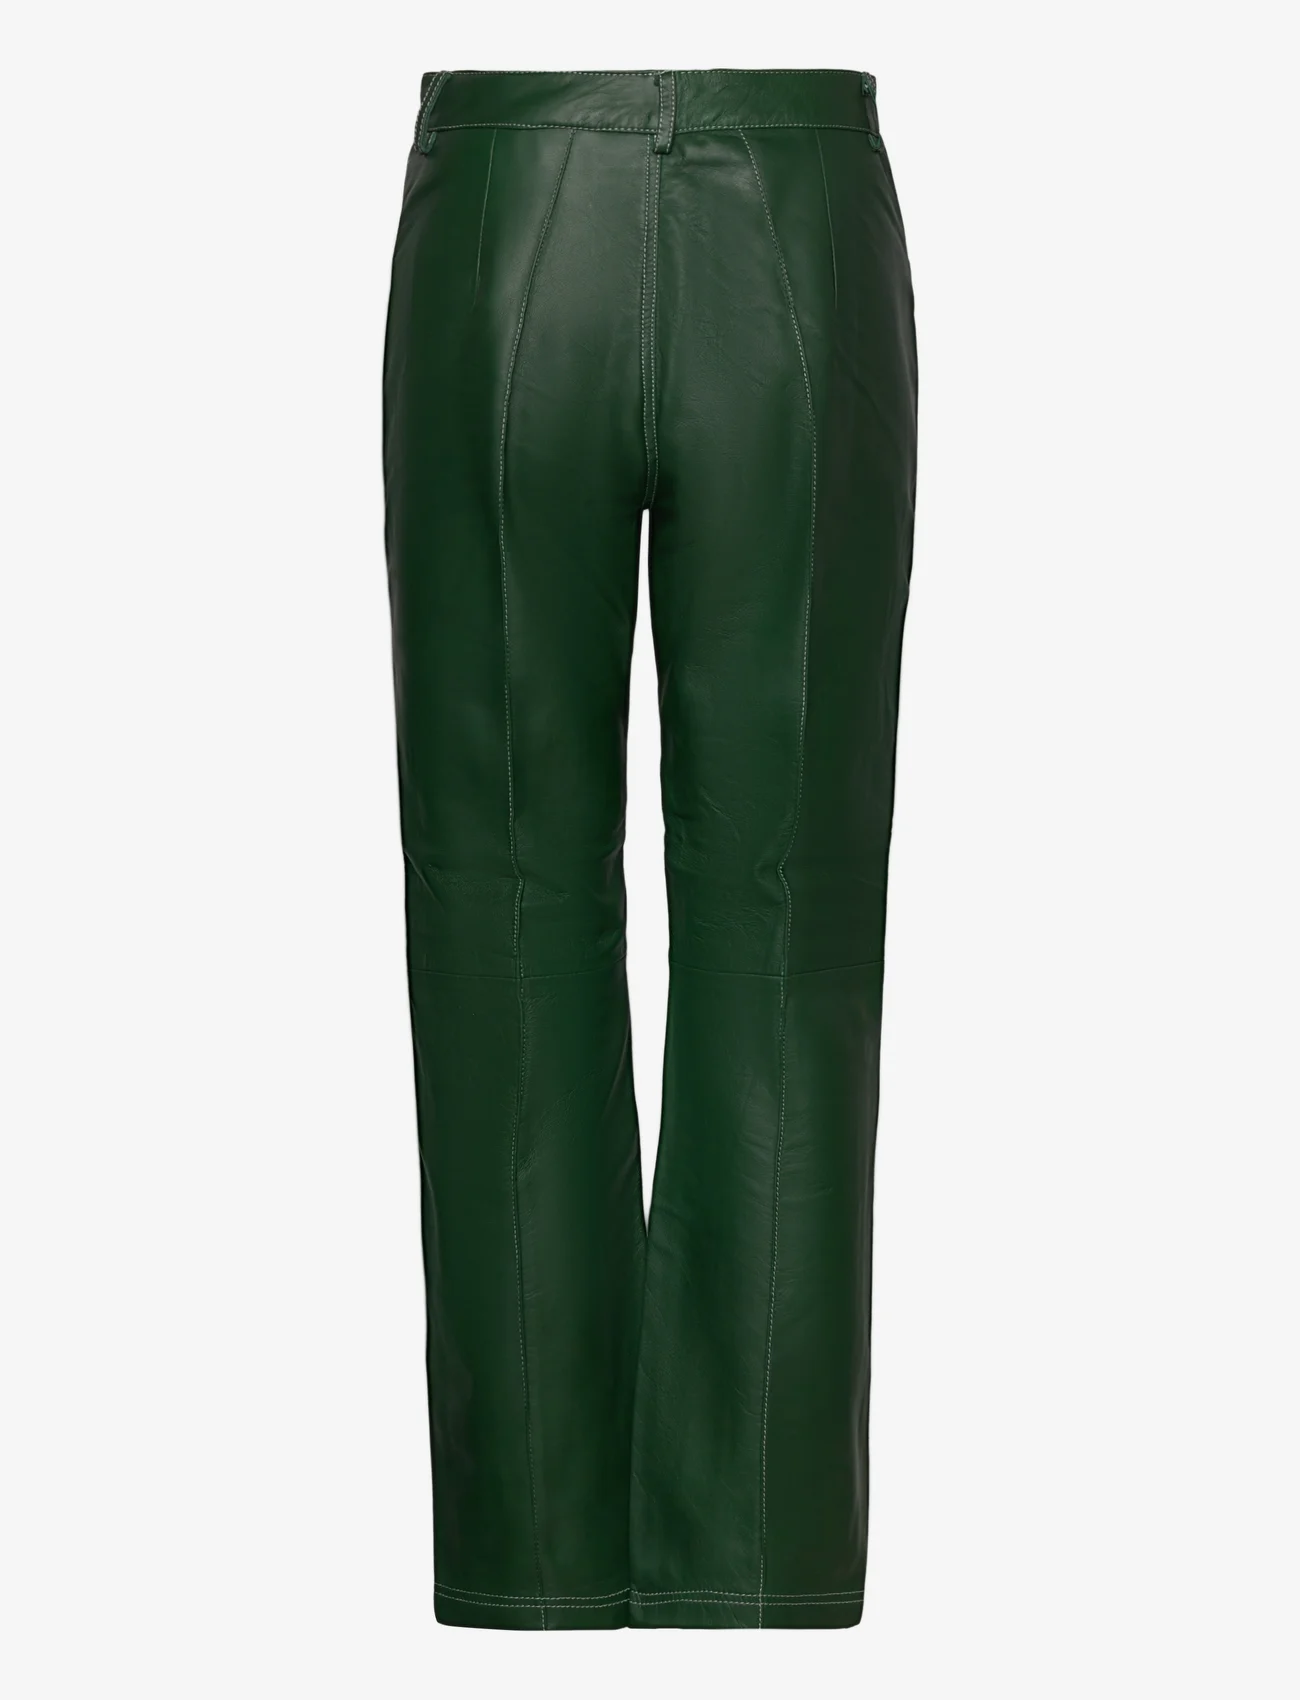 Hosbjerg - Jody Leather Pants - dark green - 1